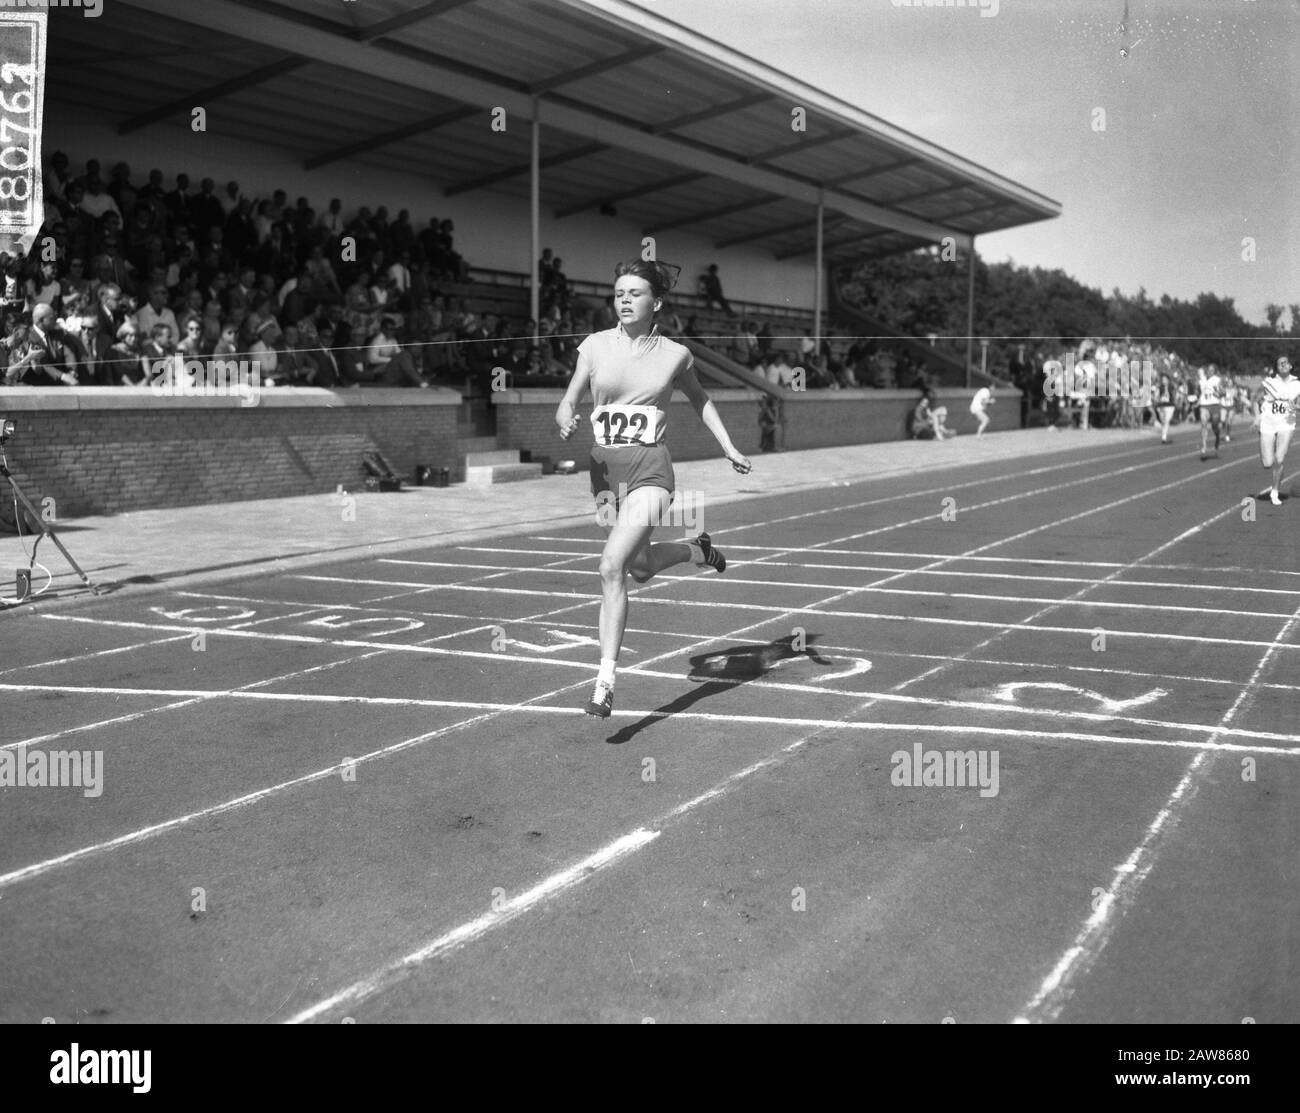 Dutch athletics championships in Groningen, Hilda Slaman in action Date: August 14, 1965 Location: Groningen Keywords: athletics championships Person Name: Hilda Slaman Stock Photo